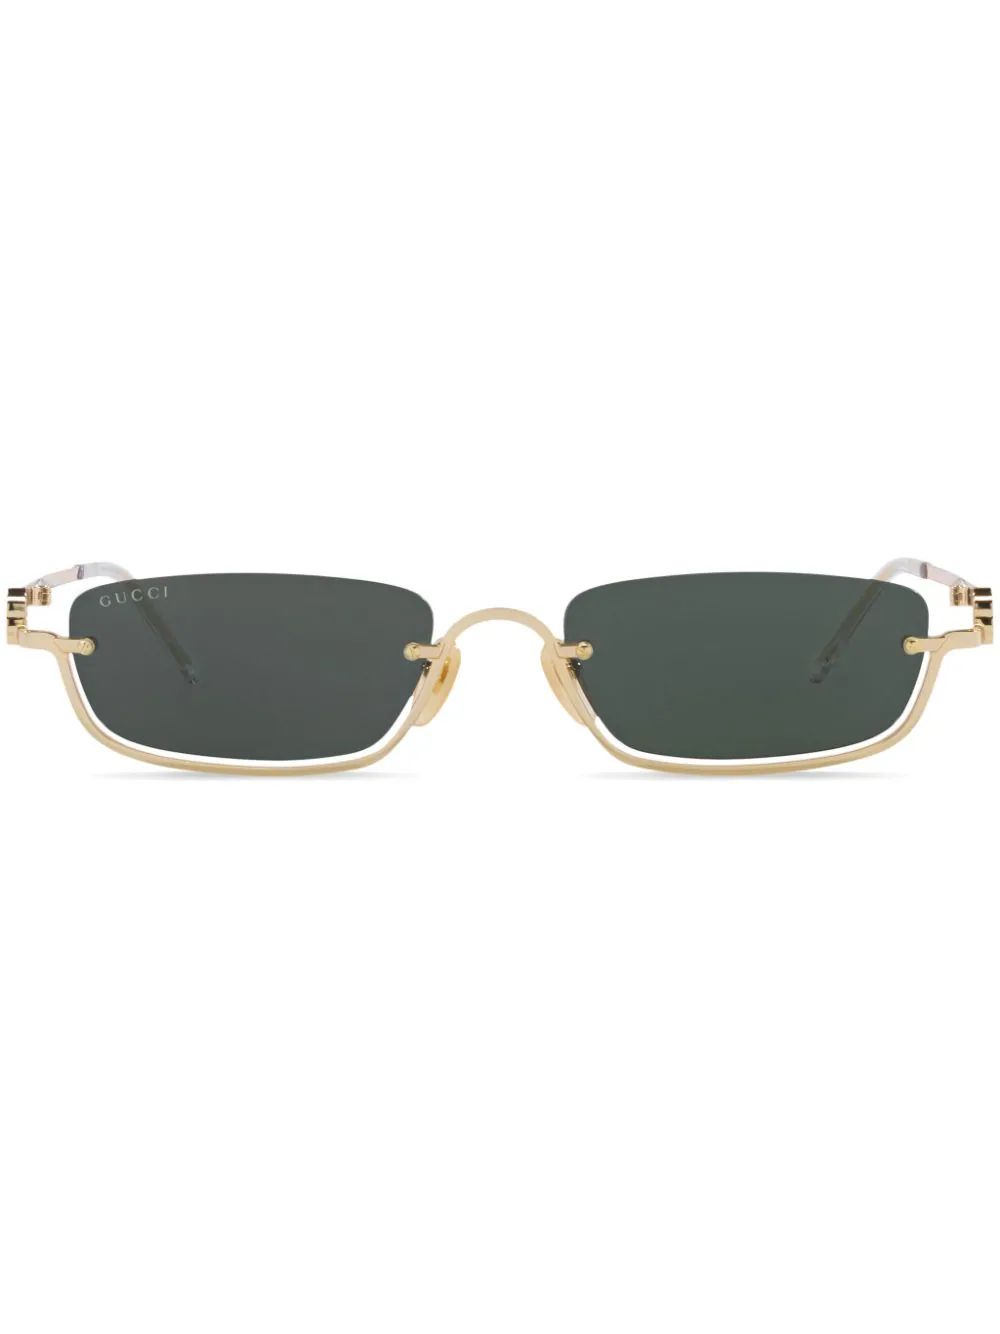 Double G half-rim frame sunglasses | Farfetch Global